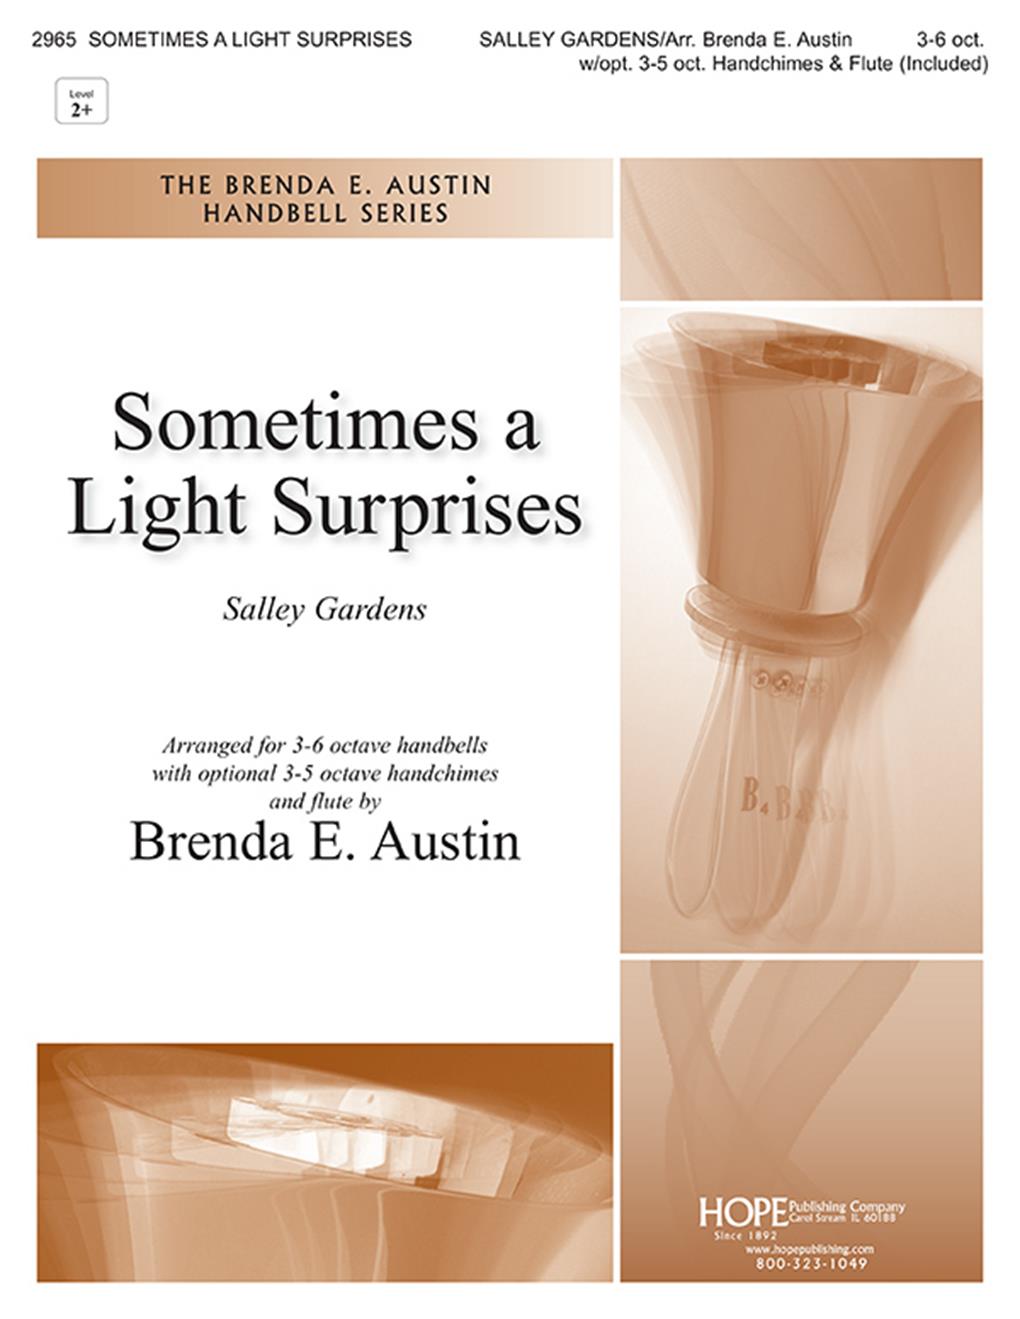 Sometimes a Light Surprises - 3-6 Oct. Cover Image